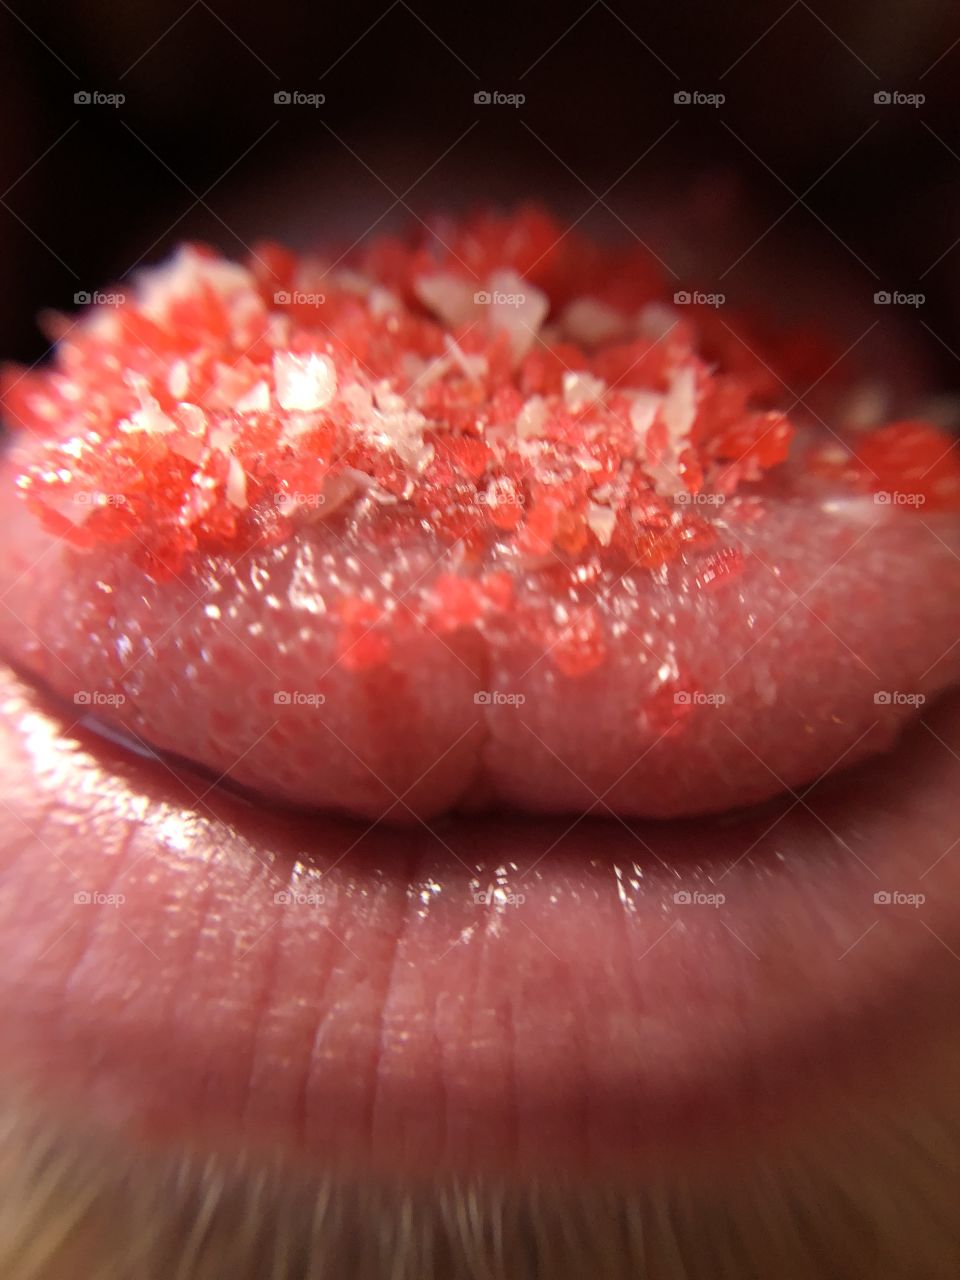 Candy tongue